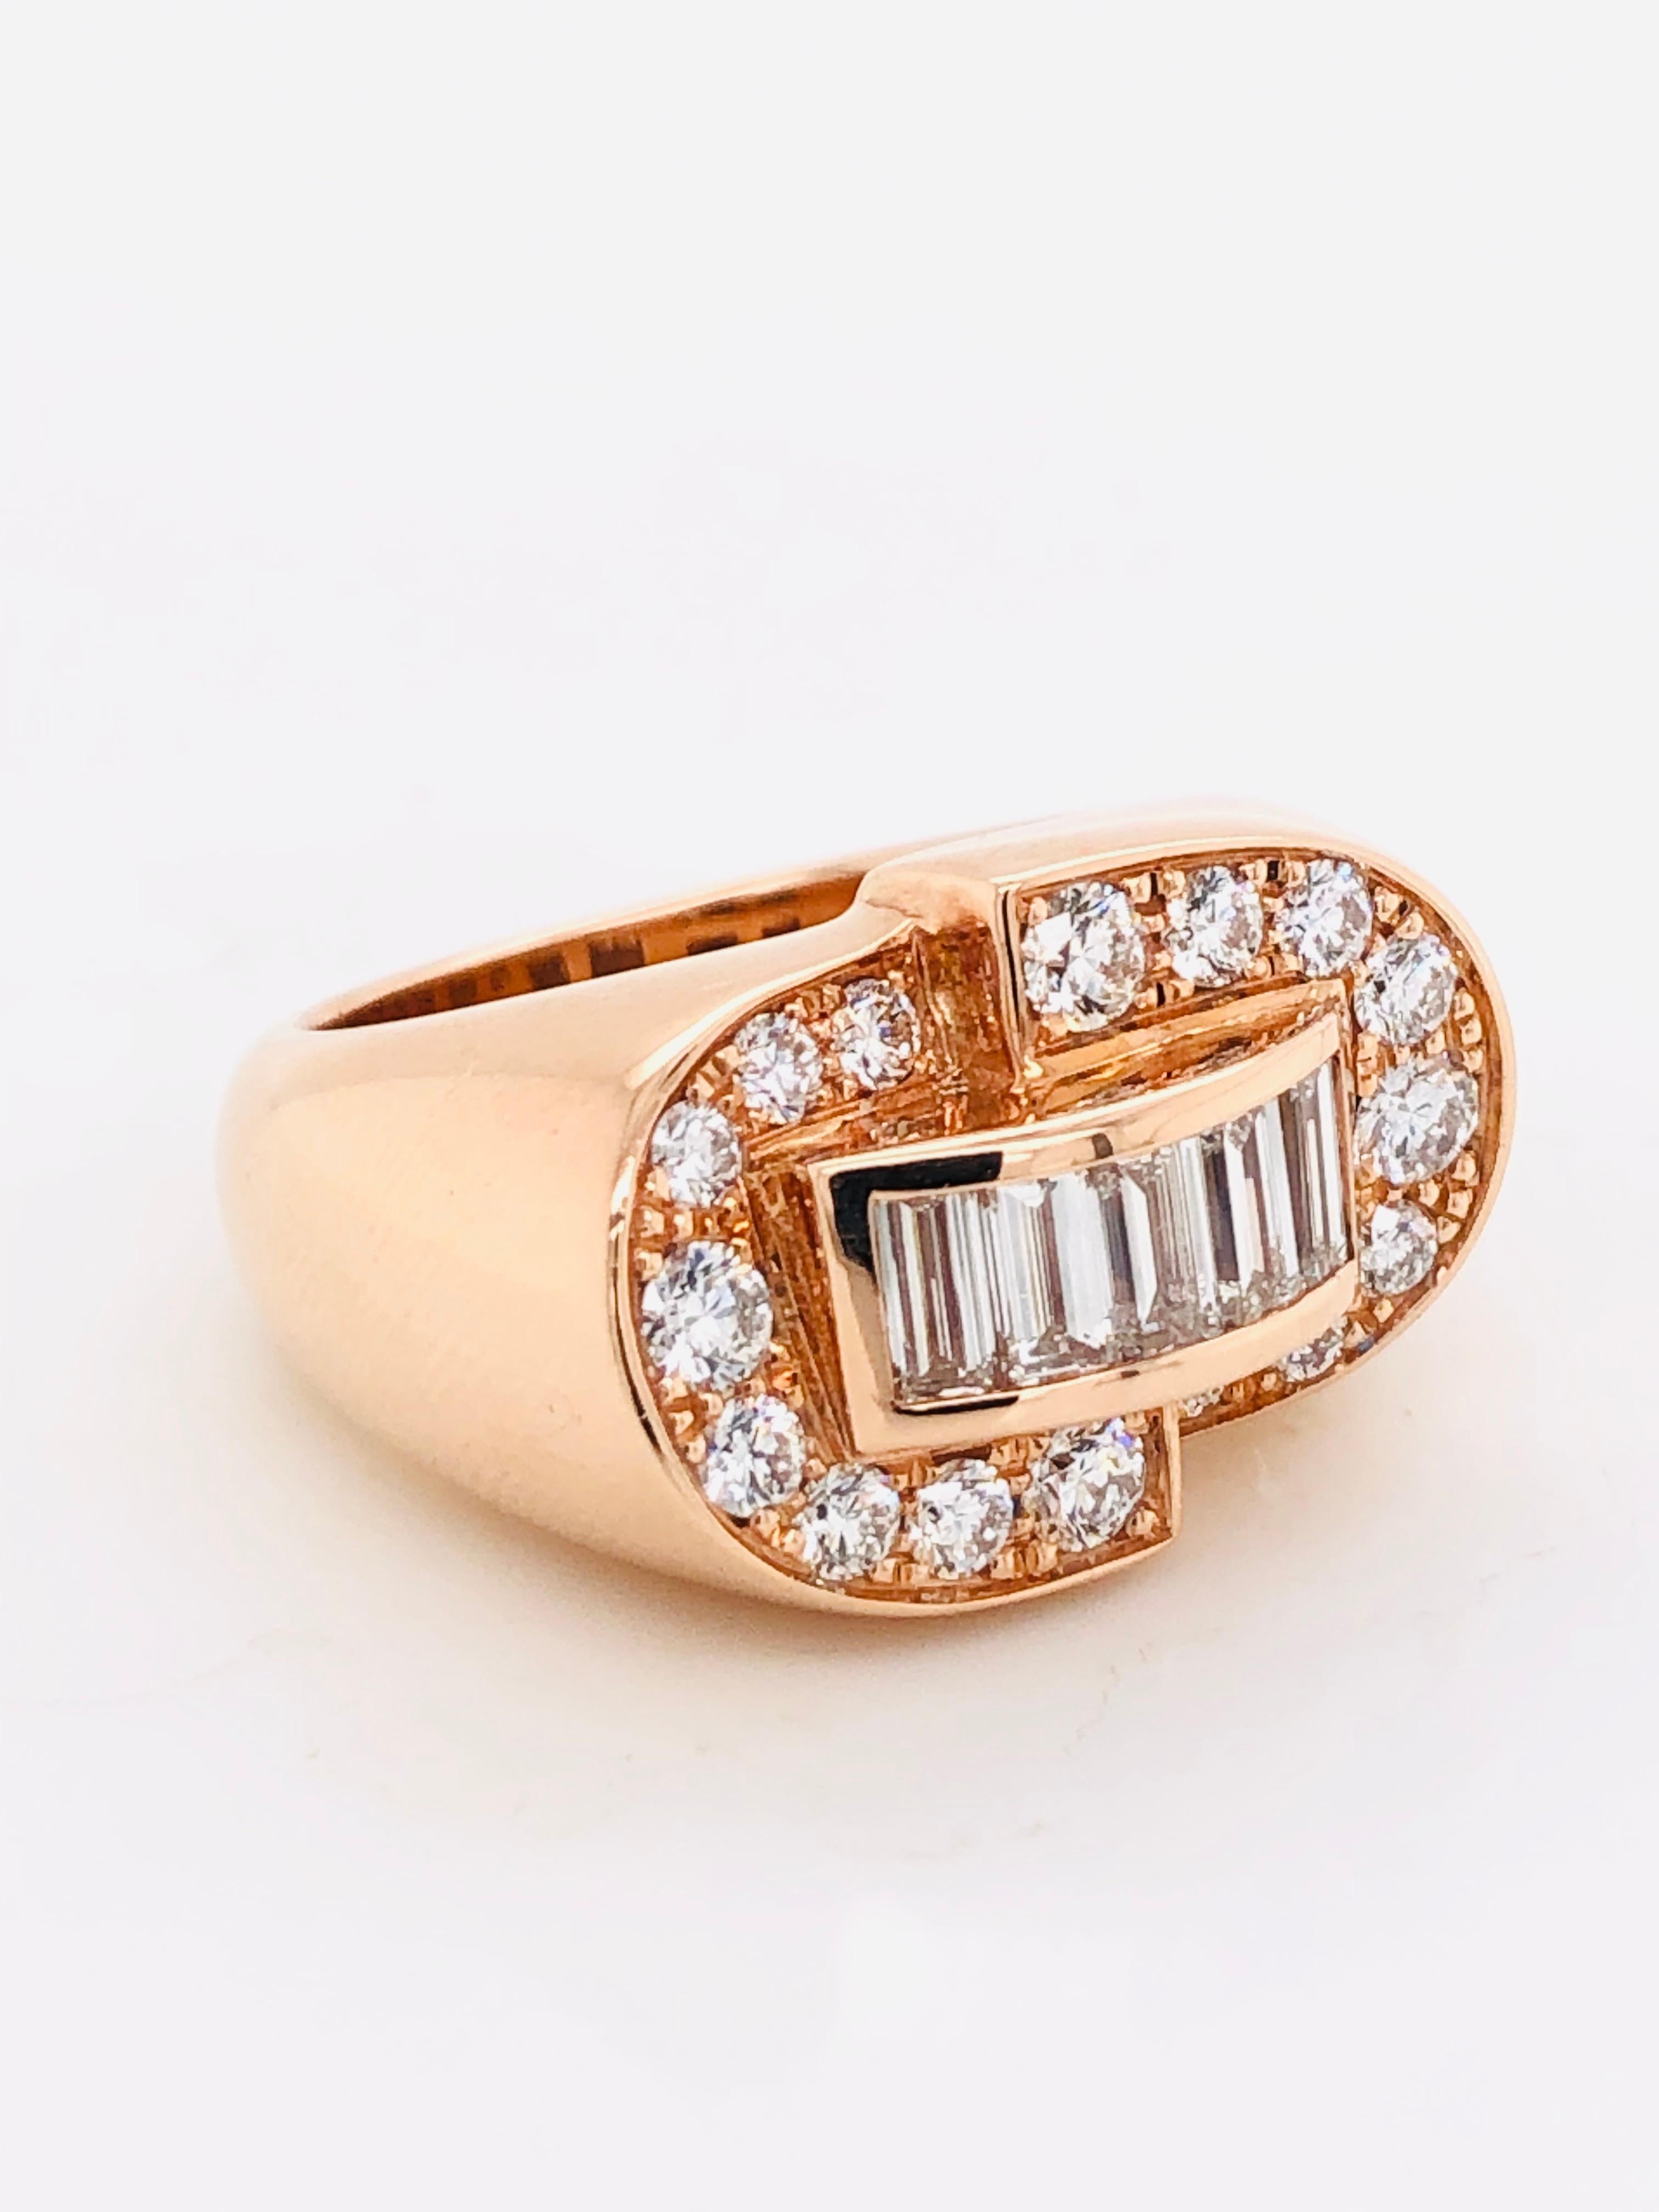 White Diamonds Baguette Cut and Brilliant Cut on Rose Gold 18 Karat Fashion Ring 3